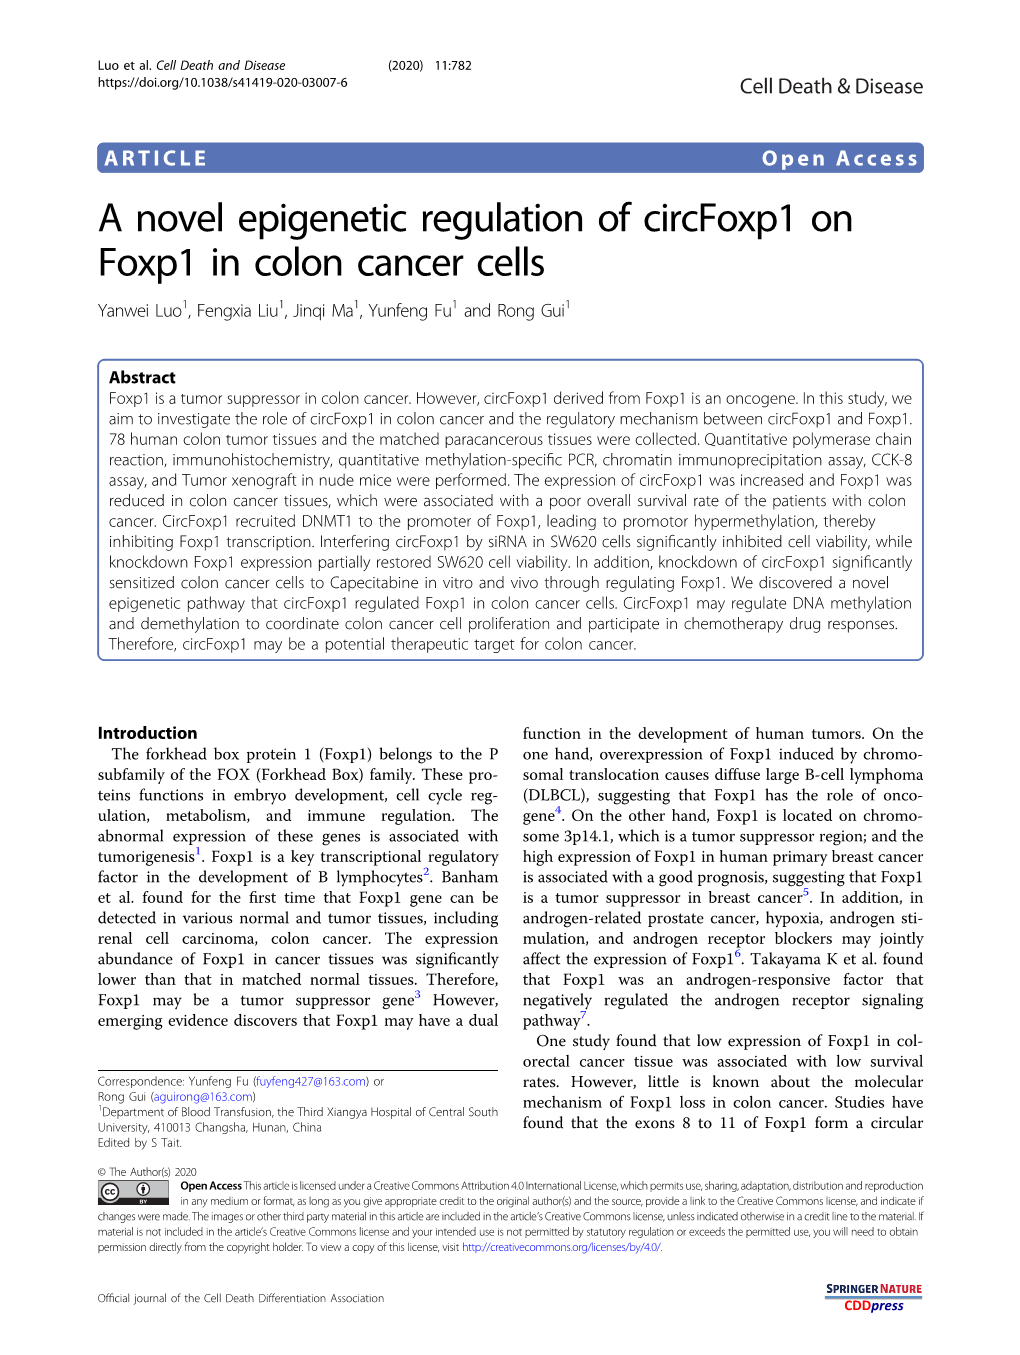 A Novel Epigenetic Regulation of Circfoxp1 on Foxp1 in Colon Cancer Cells Yanwei Luo1, Fengxia Liu1,Jinqima1,Yunfengfu1 and Rong Gui1